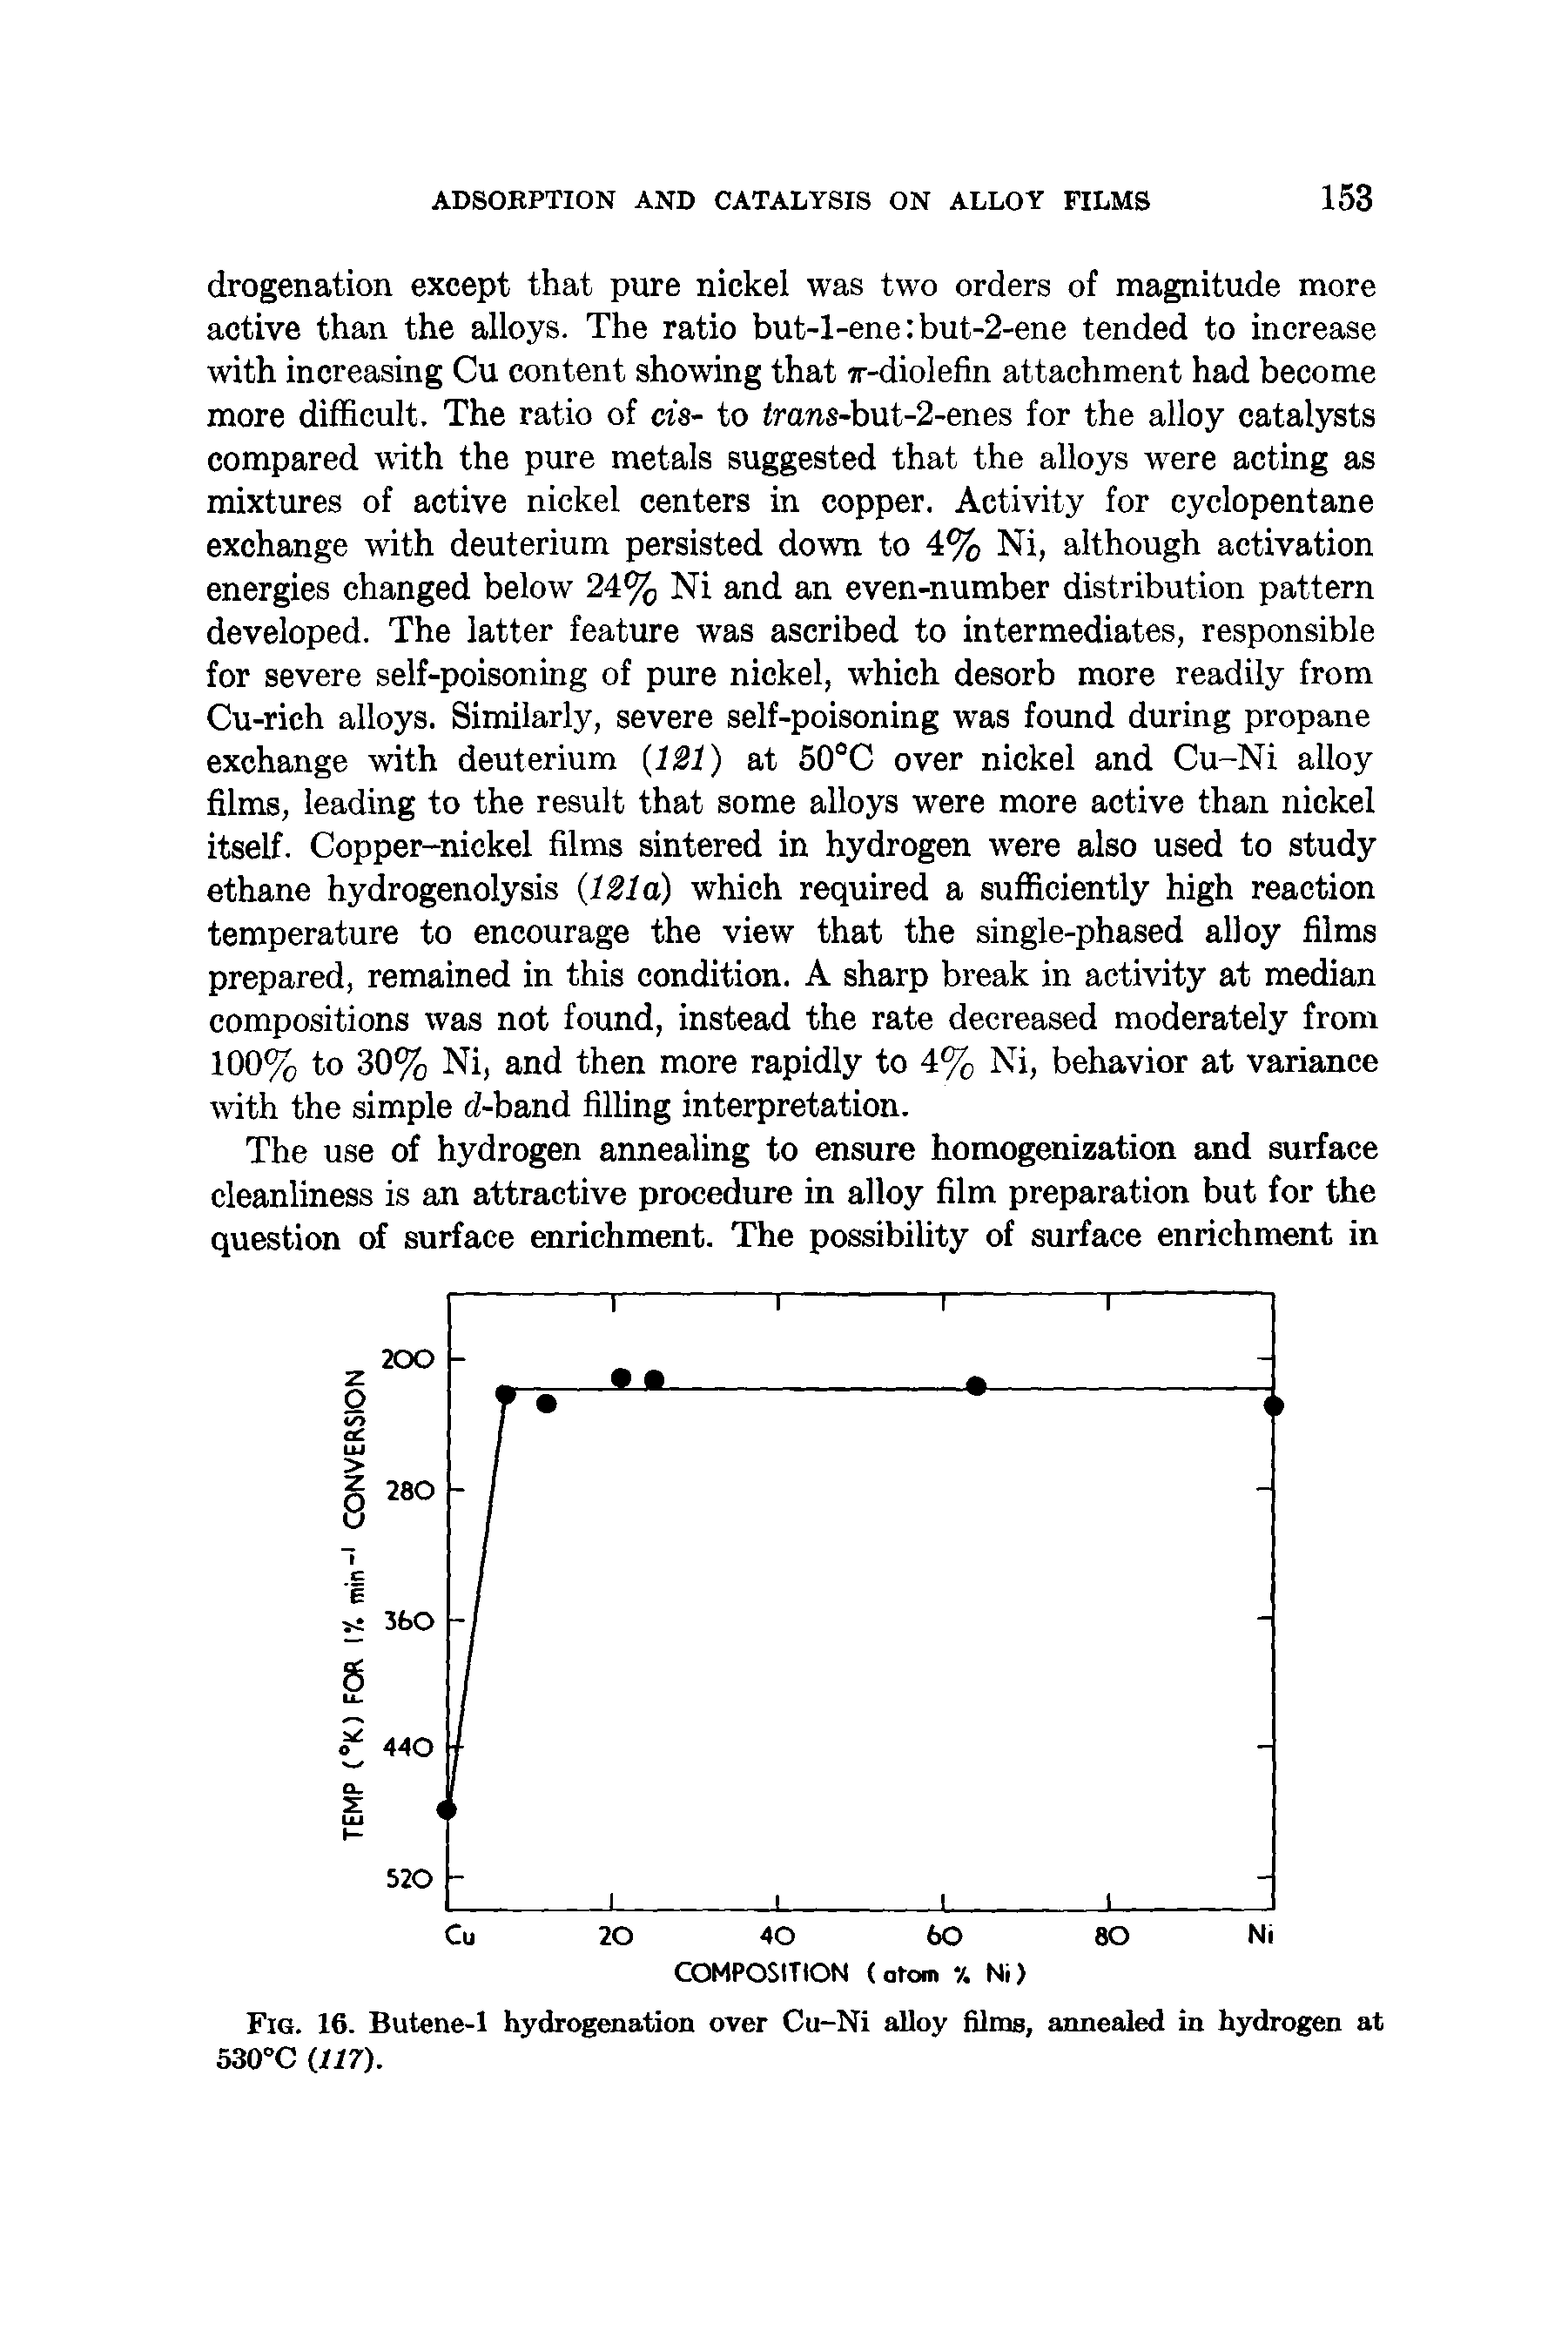 Fig. 16. Butene-1 hydrogenation over Cu-Ni alloy films, annealed in hydrogen at 530°C (117).